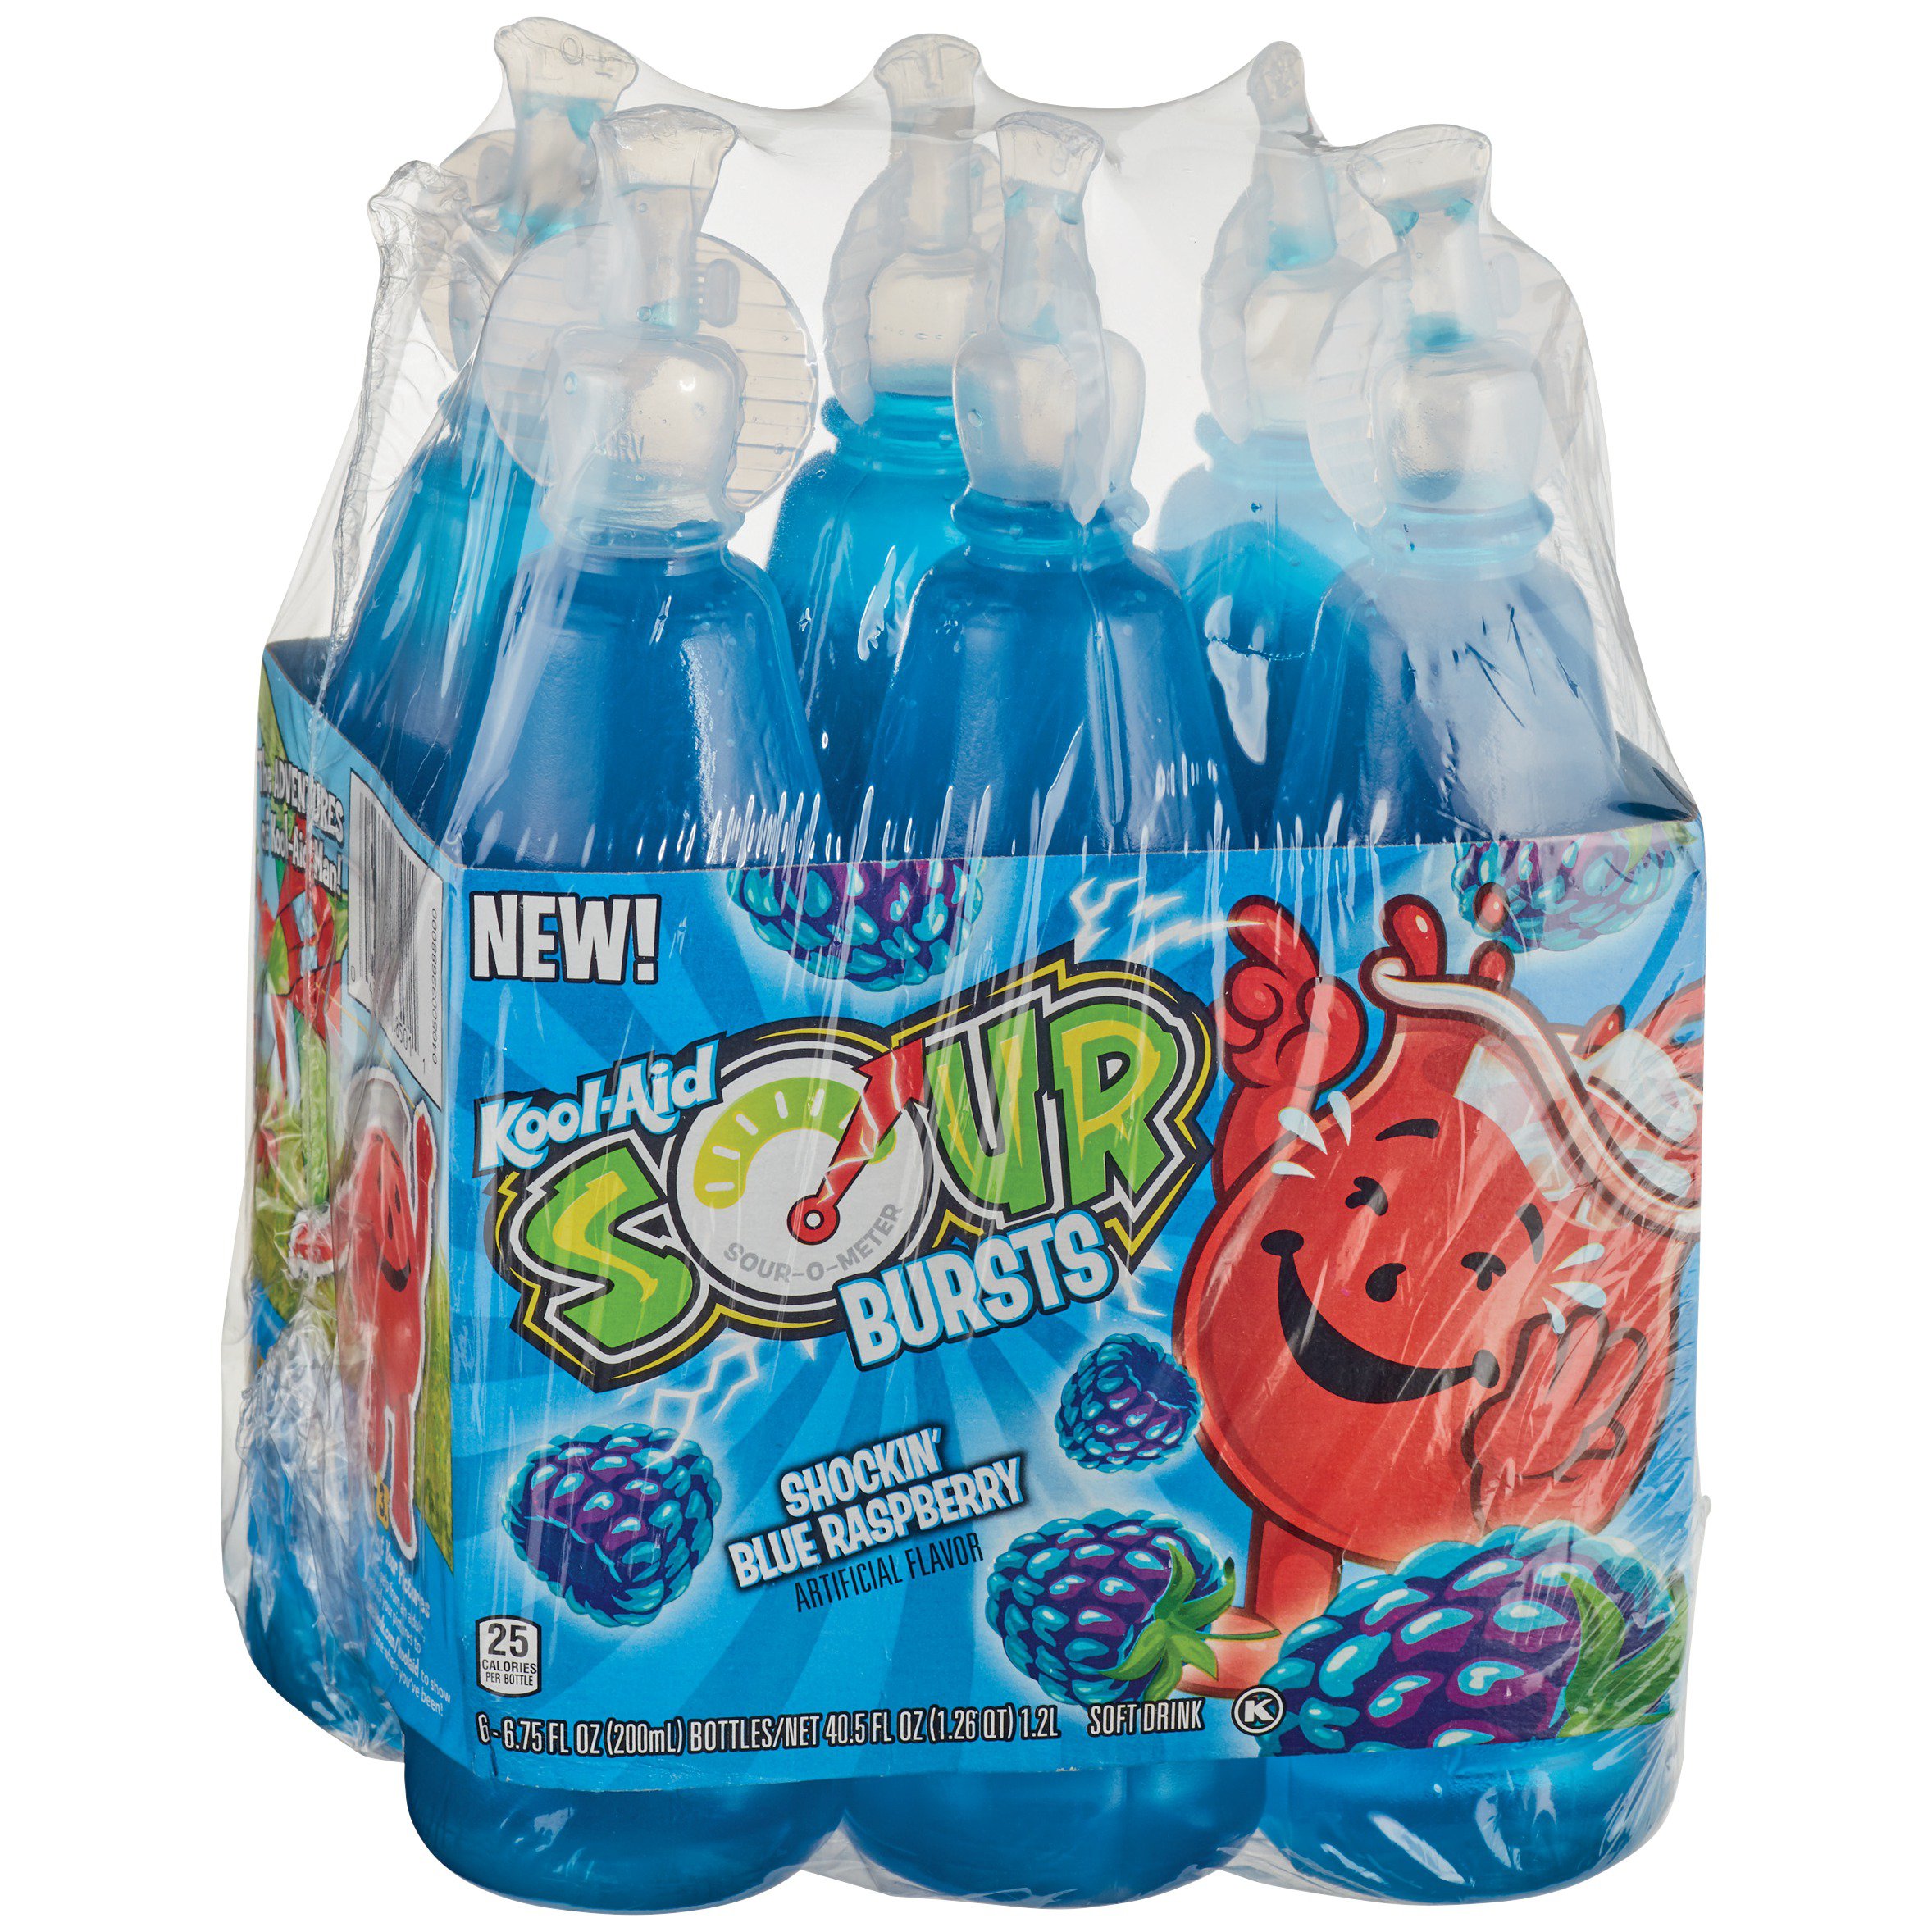 kool-aid-sour-bursts-shockin-blue-raspberry-soft-drink-6-75-oz-bottles